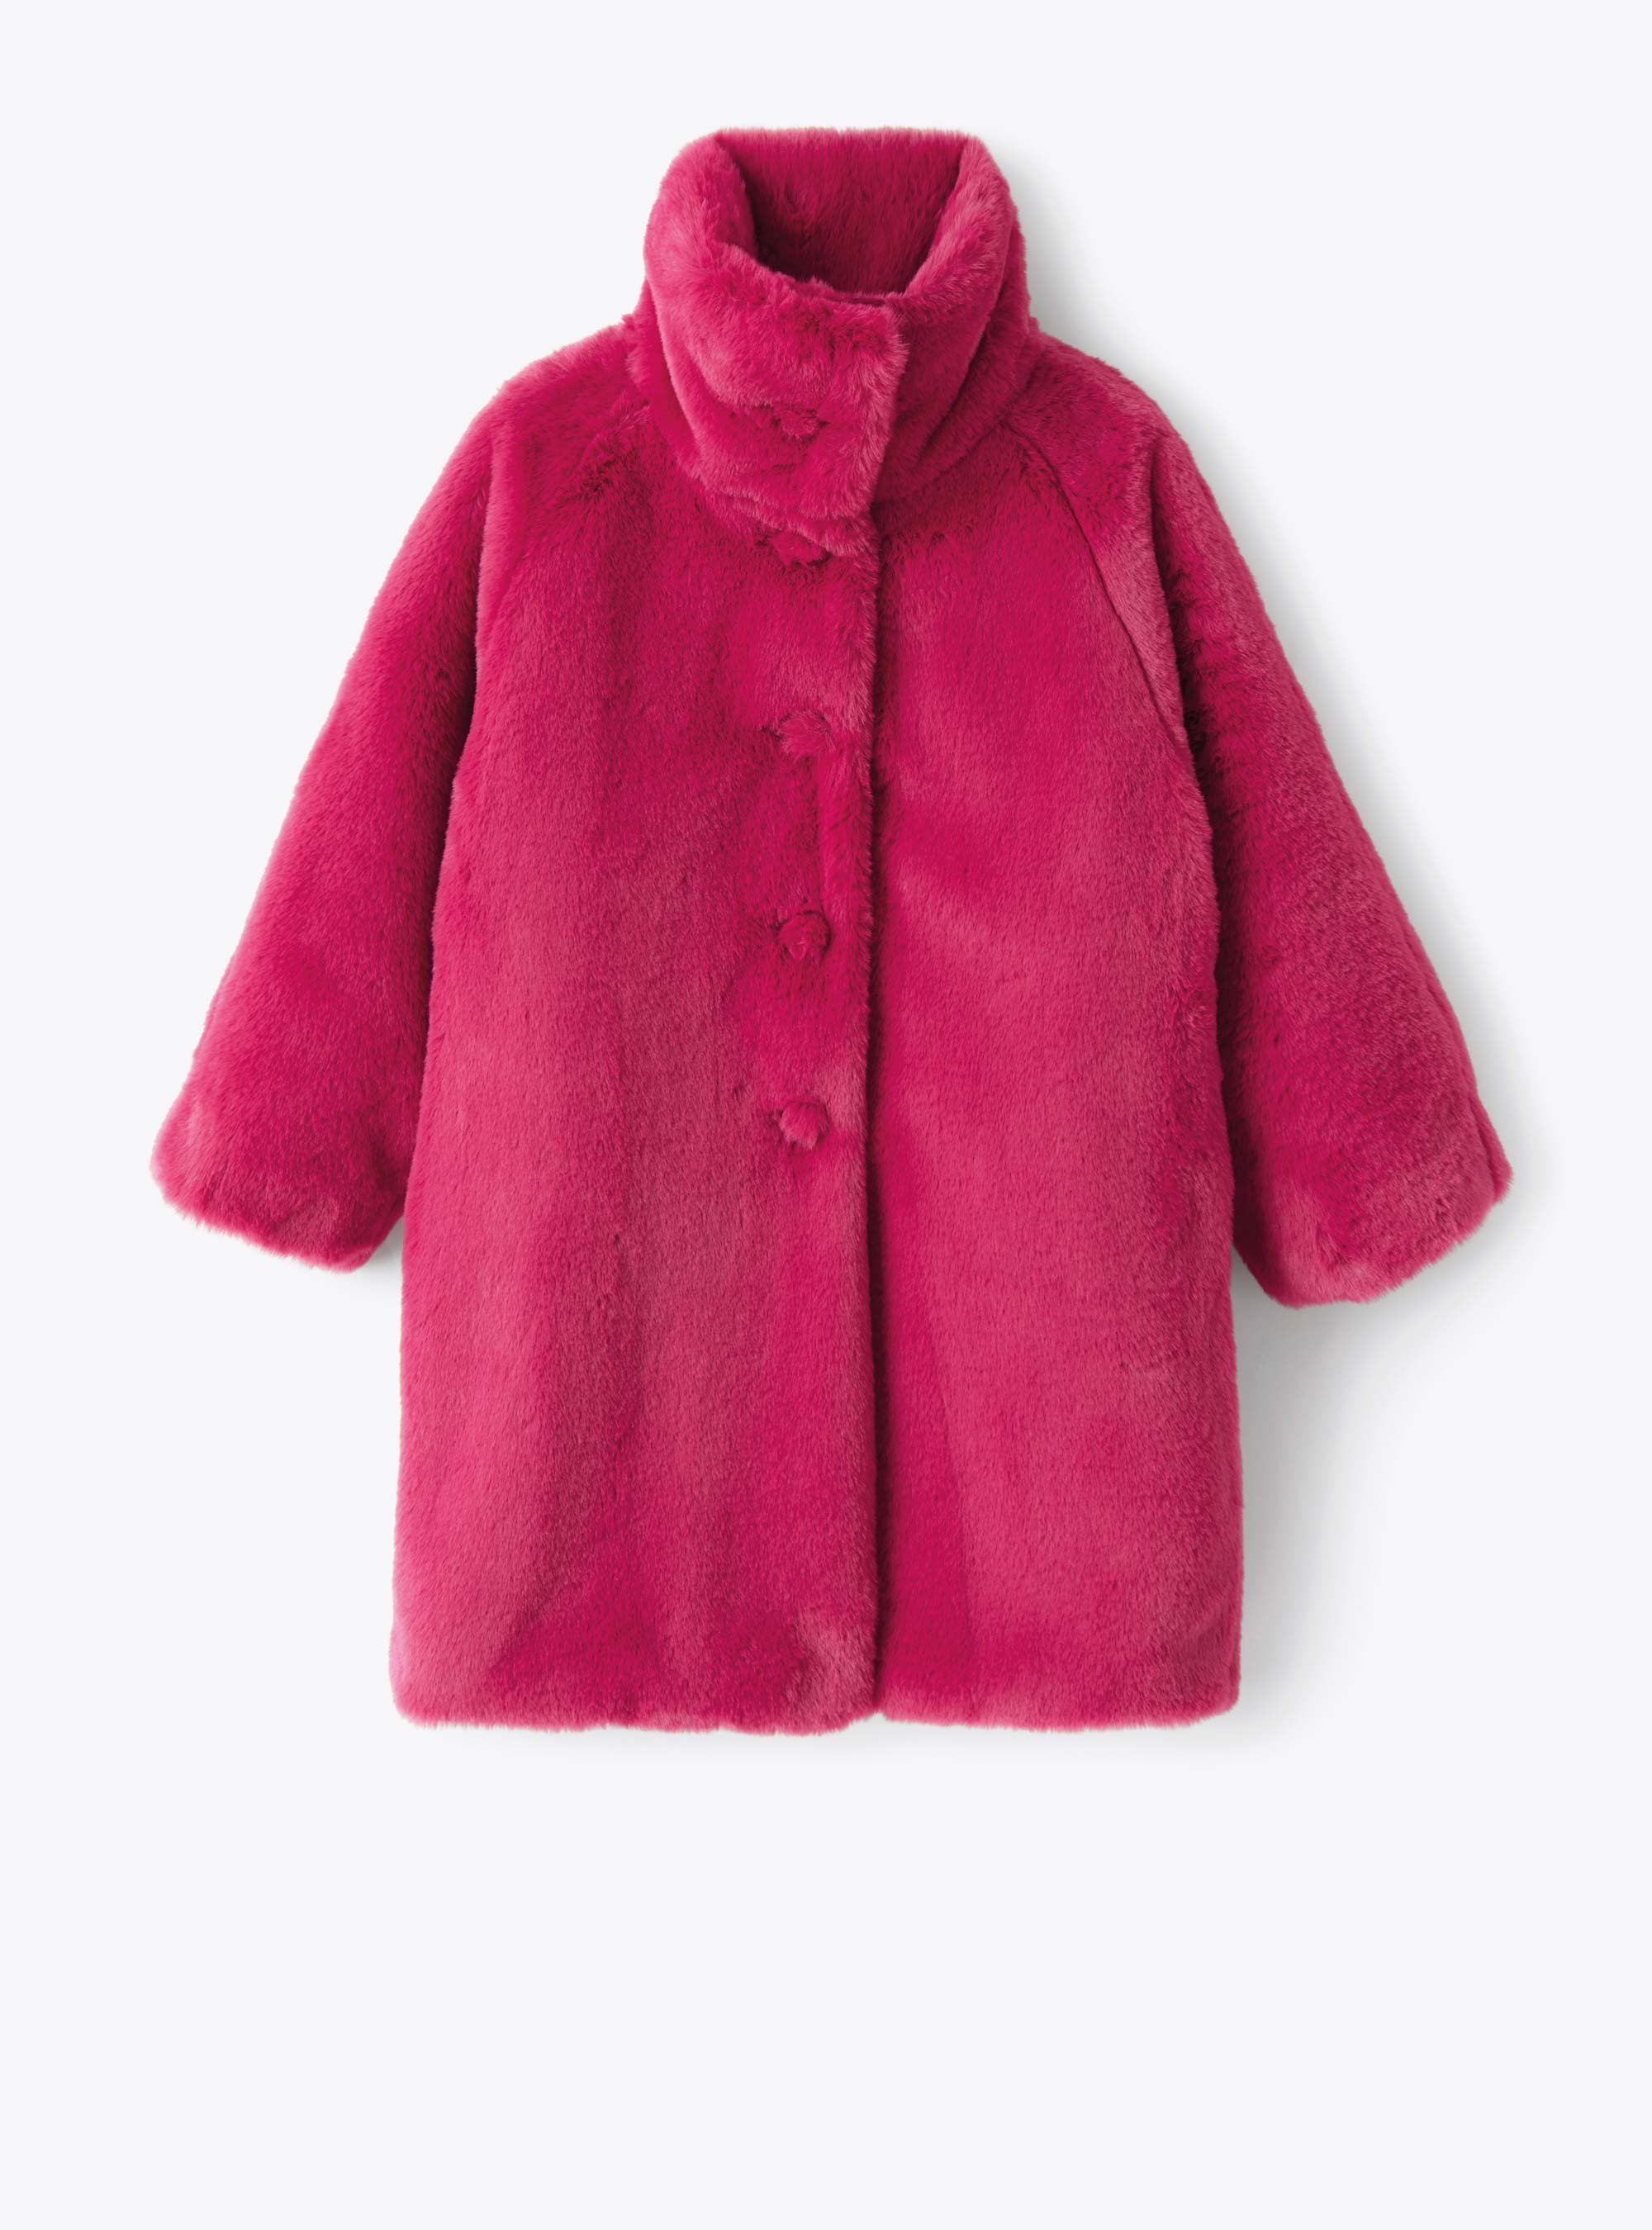 Coat in fuchsia-pink faux fur - Fuchsia | Il Gufo